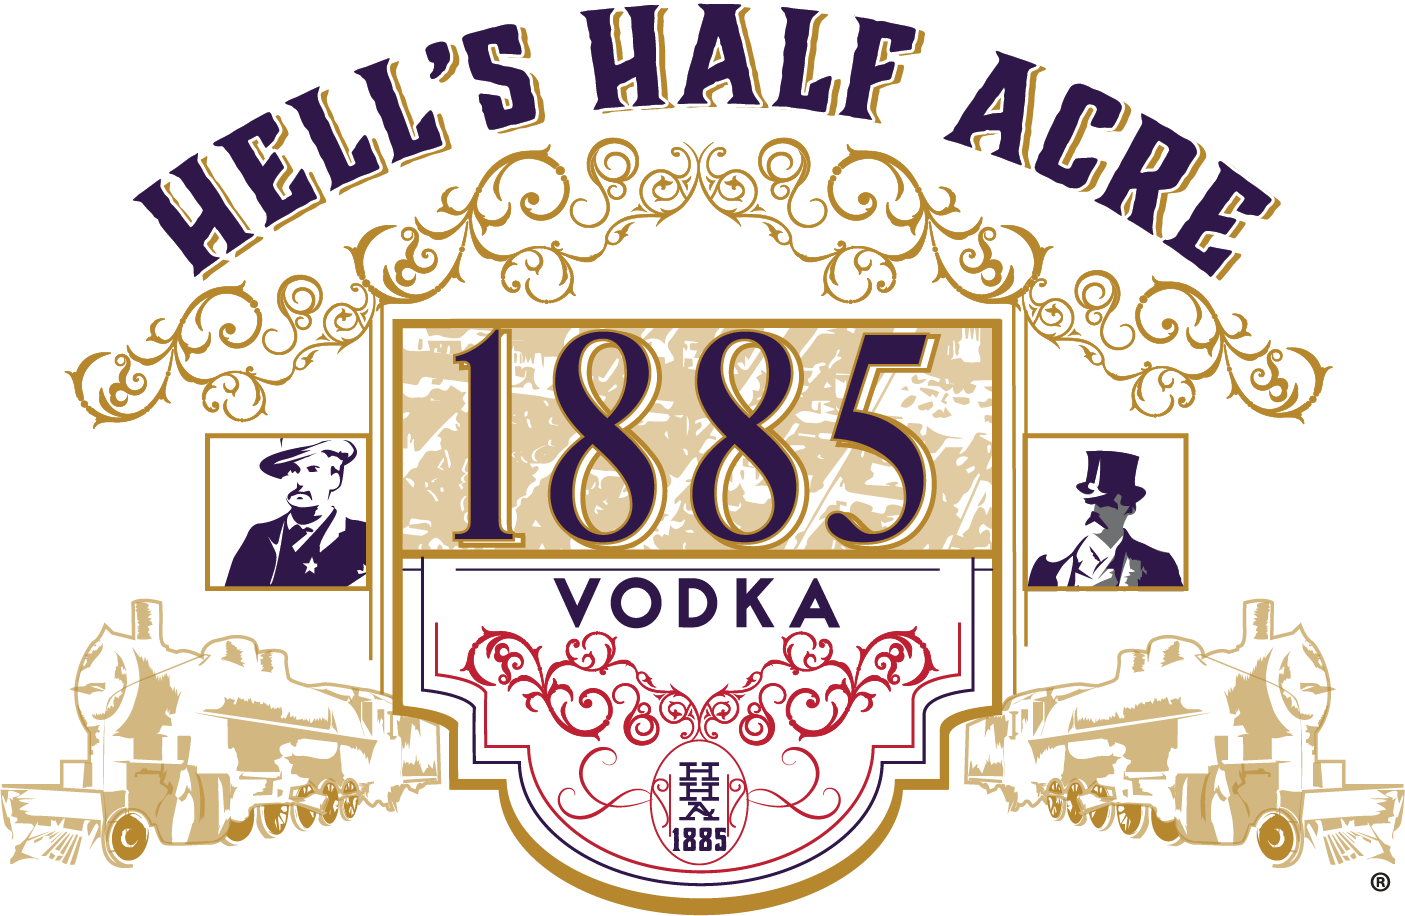 Hell's Half Acre 1885 Vodka Logo